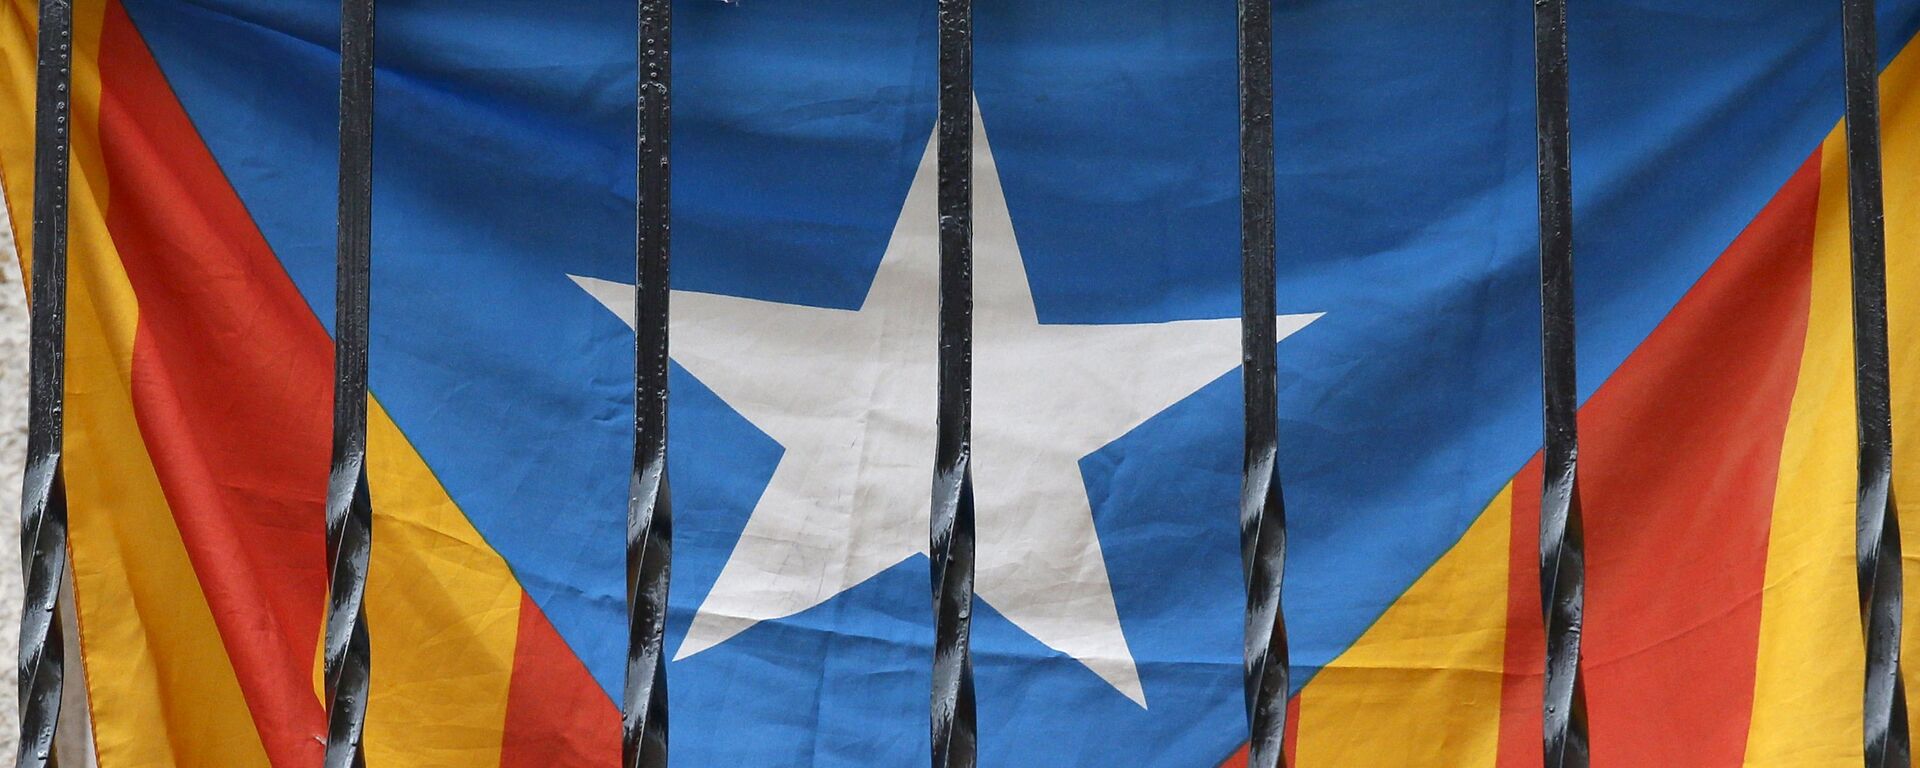 'Estelada', bandera de Cataluña en un balcón en Barcelona - Sputnik Mundo, 1920, 22.06.2021